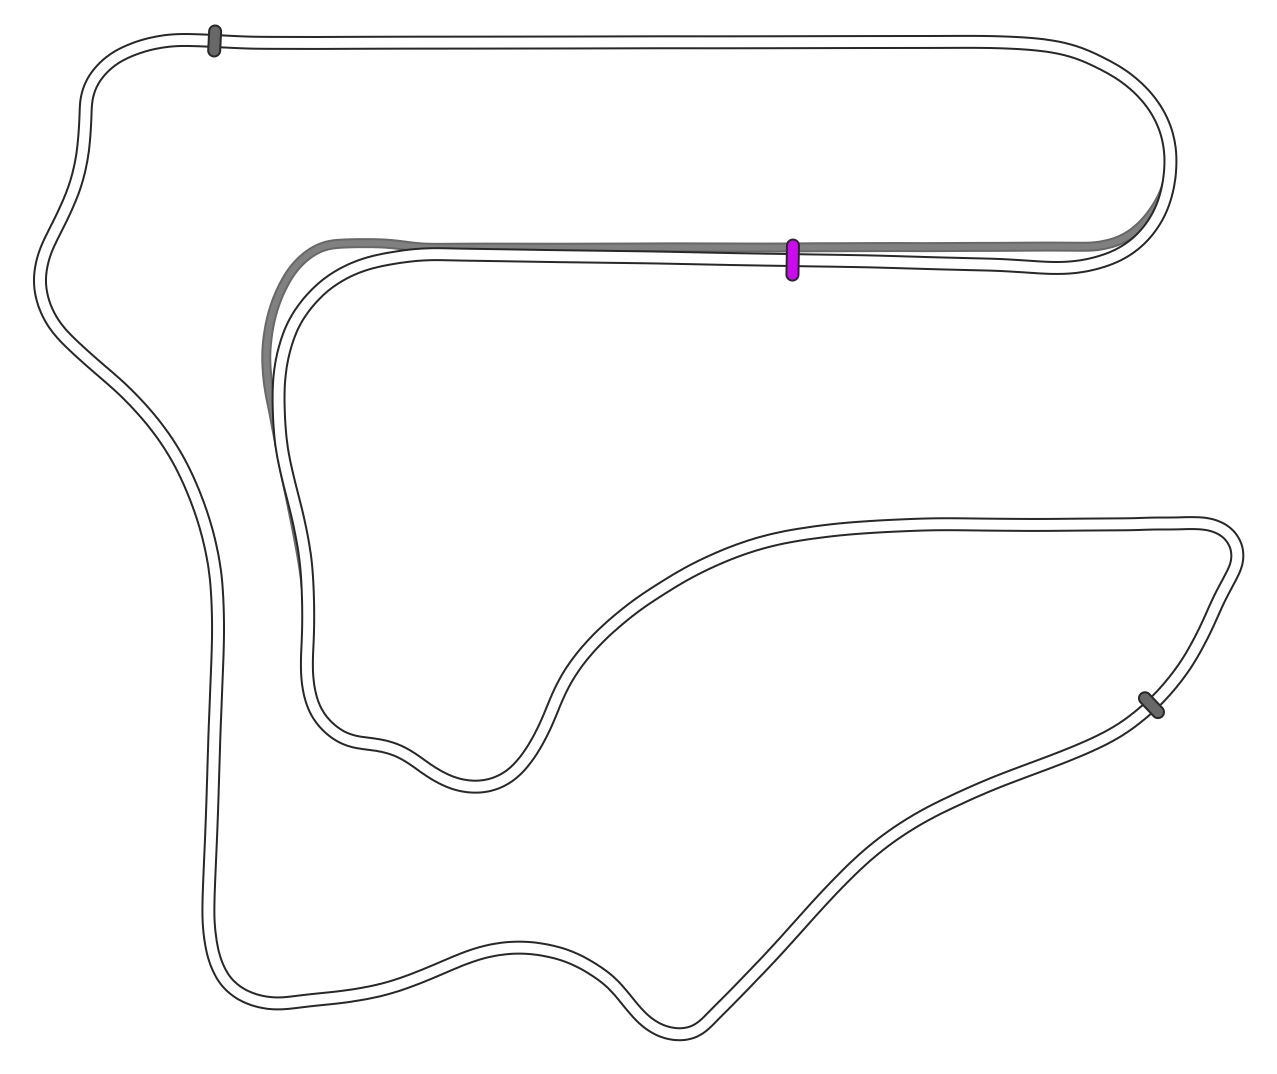 Sebring International Raceway (Raceday)